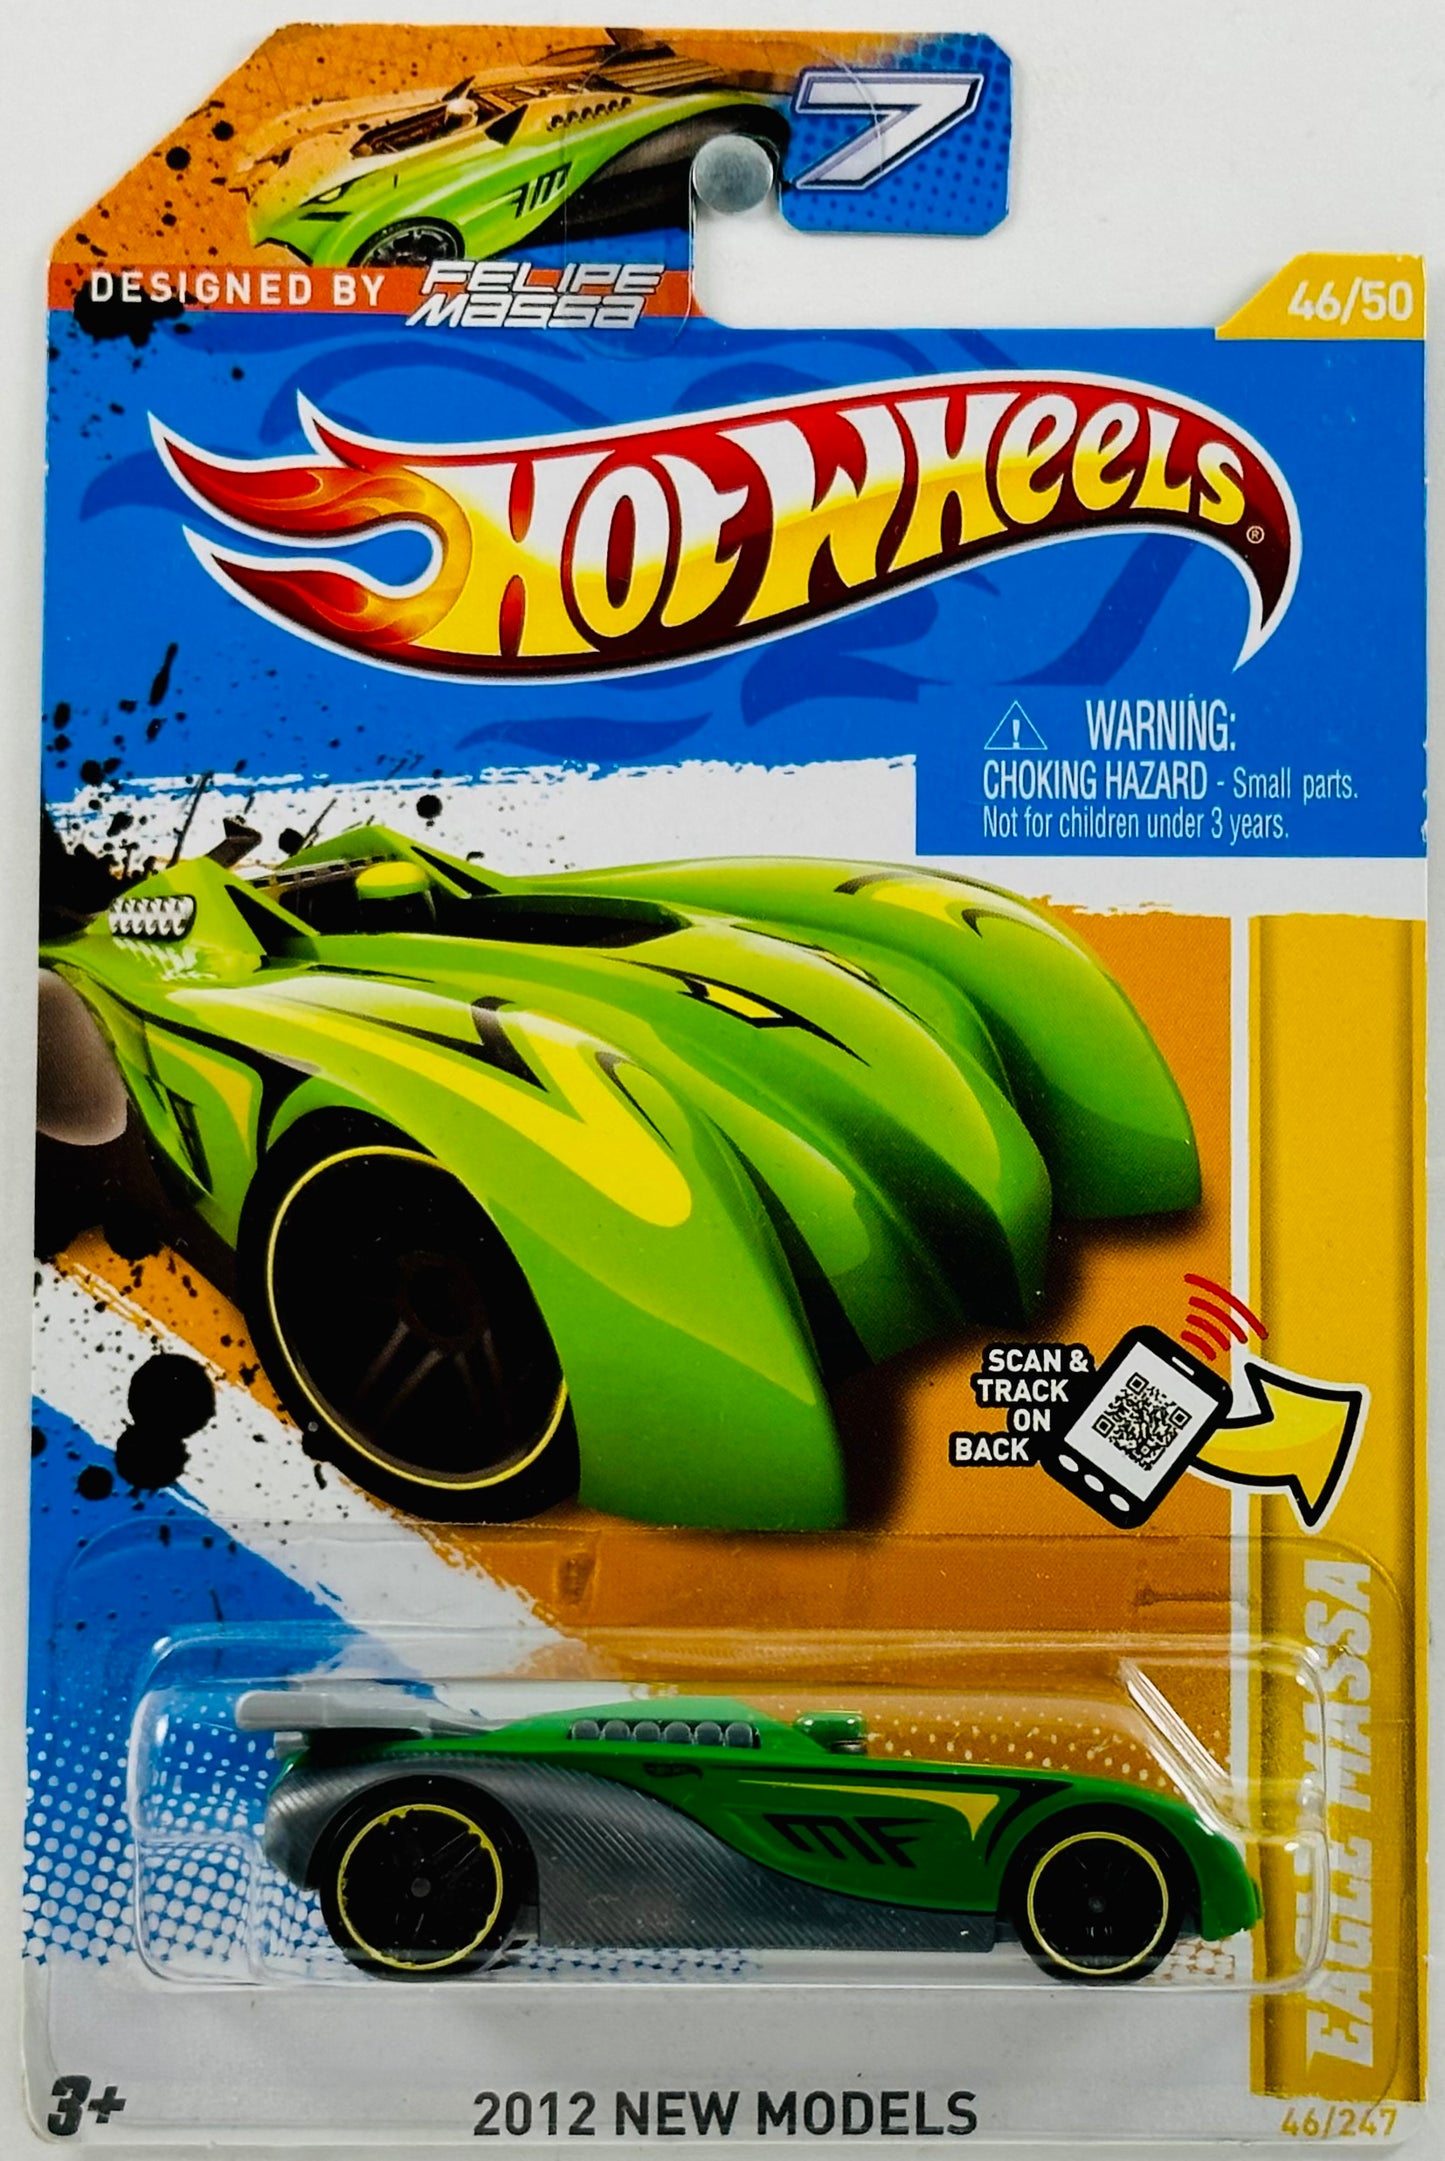 Hot Wheels 2012 - Collector # 046/247 - New Models 46/50 - Eagle Massa - Green - Designed by Felipe Massa - USA